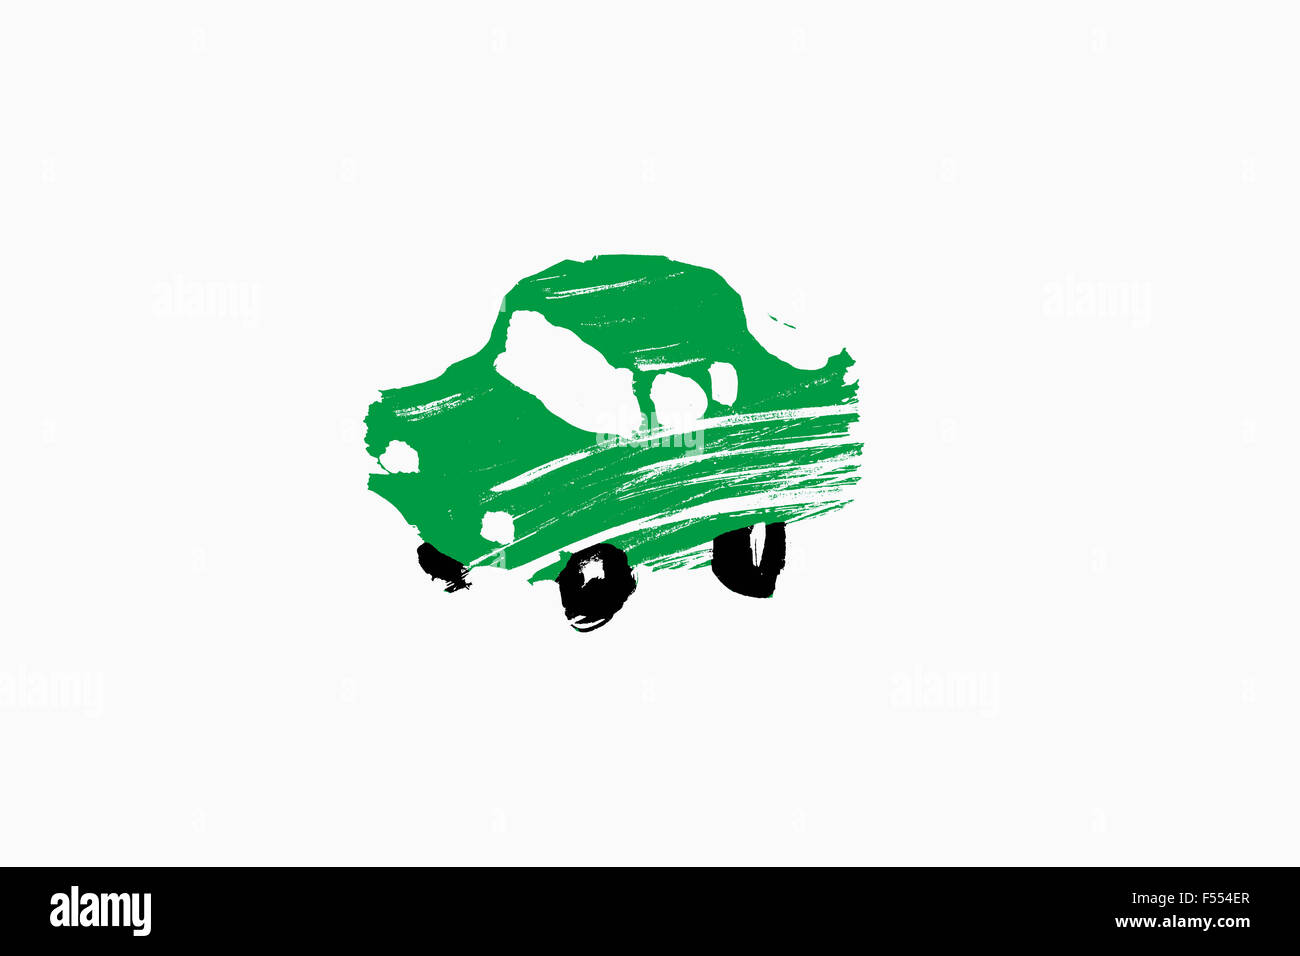 Illustrative image of green car against white background Stock Photo